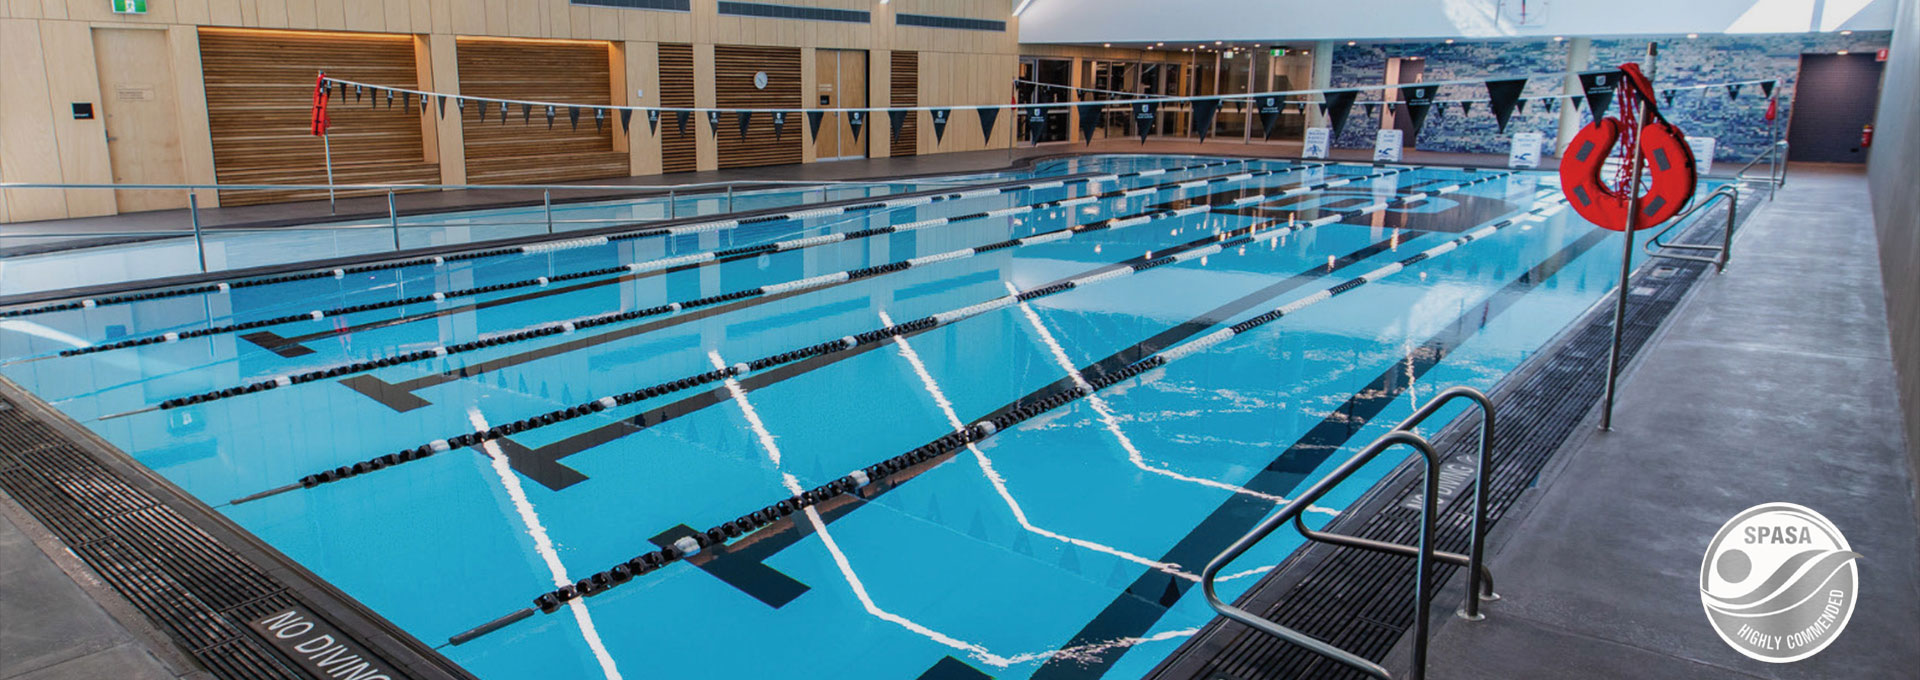 University of South Australia swimming Pool